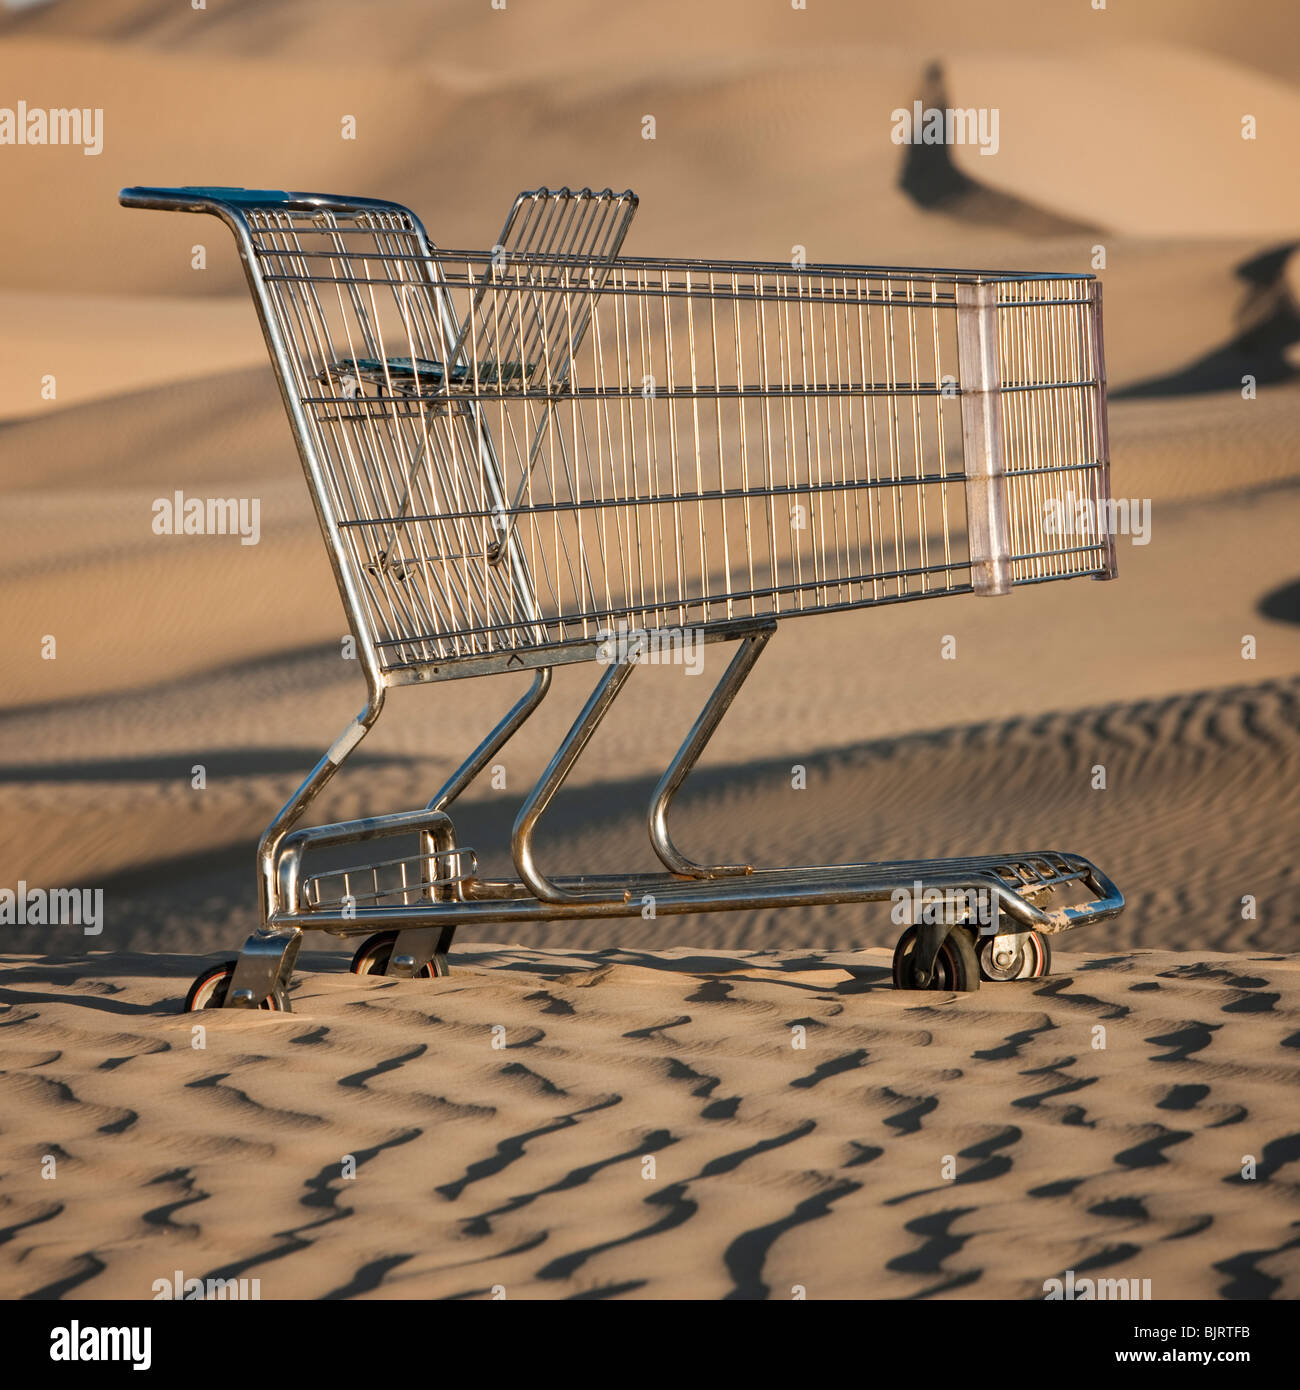 USA, Utah, Little Sahara Warenkorb auf Wüste aufgegeben Stockfoto